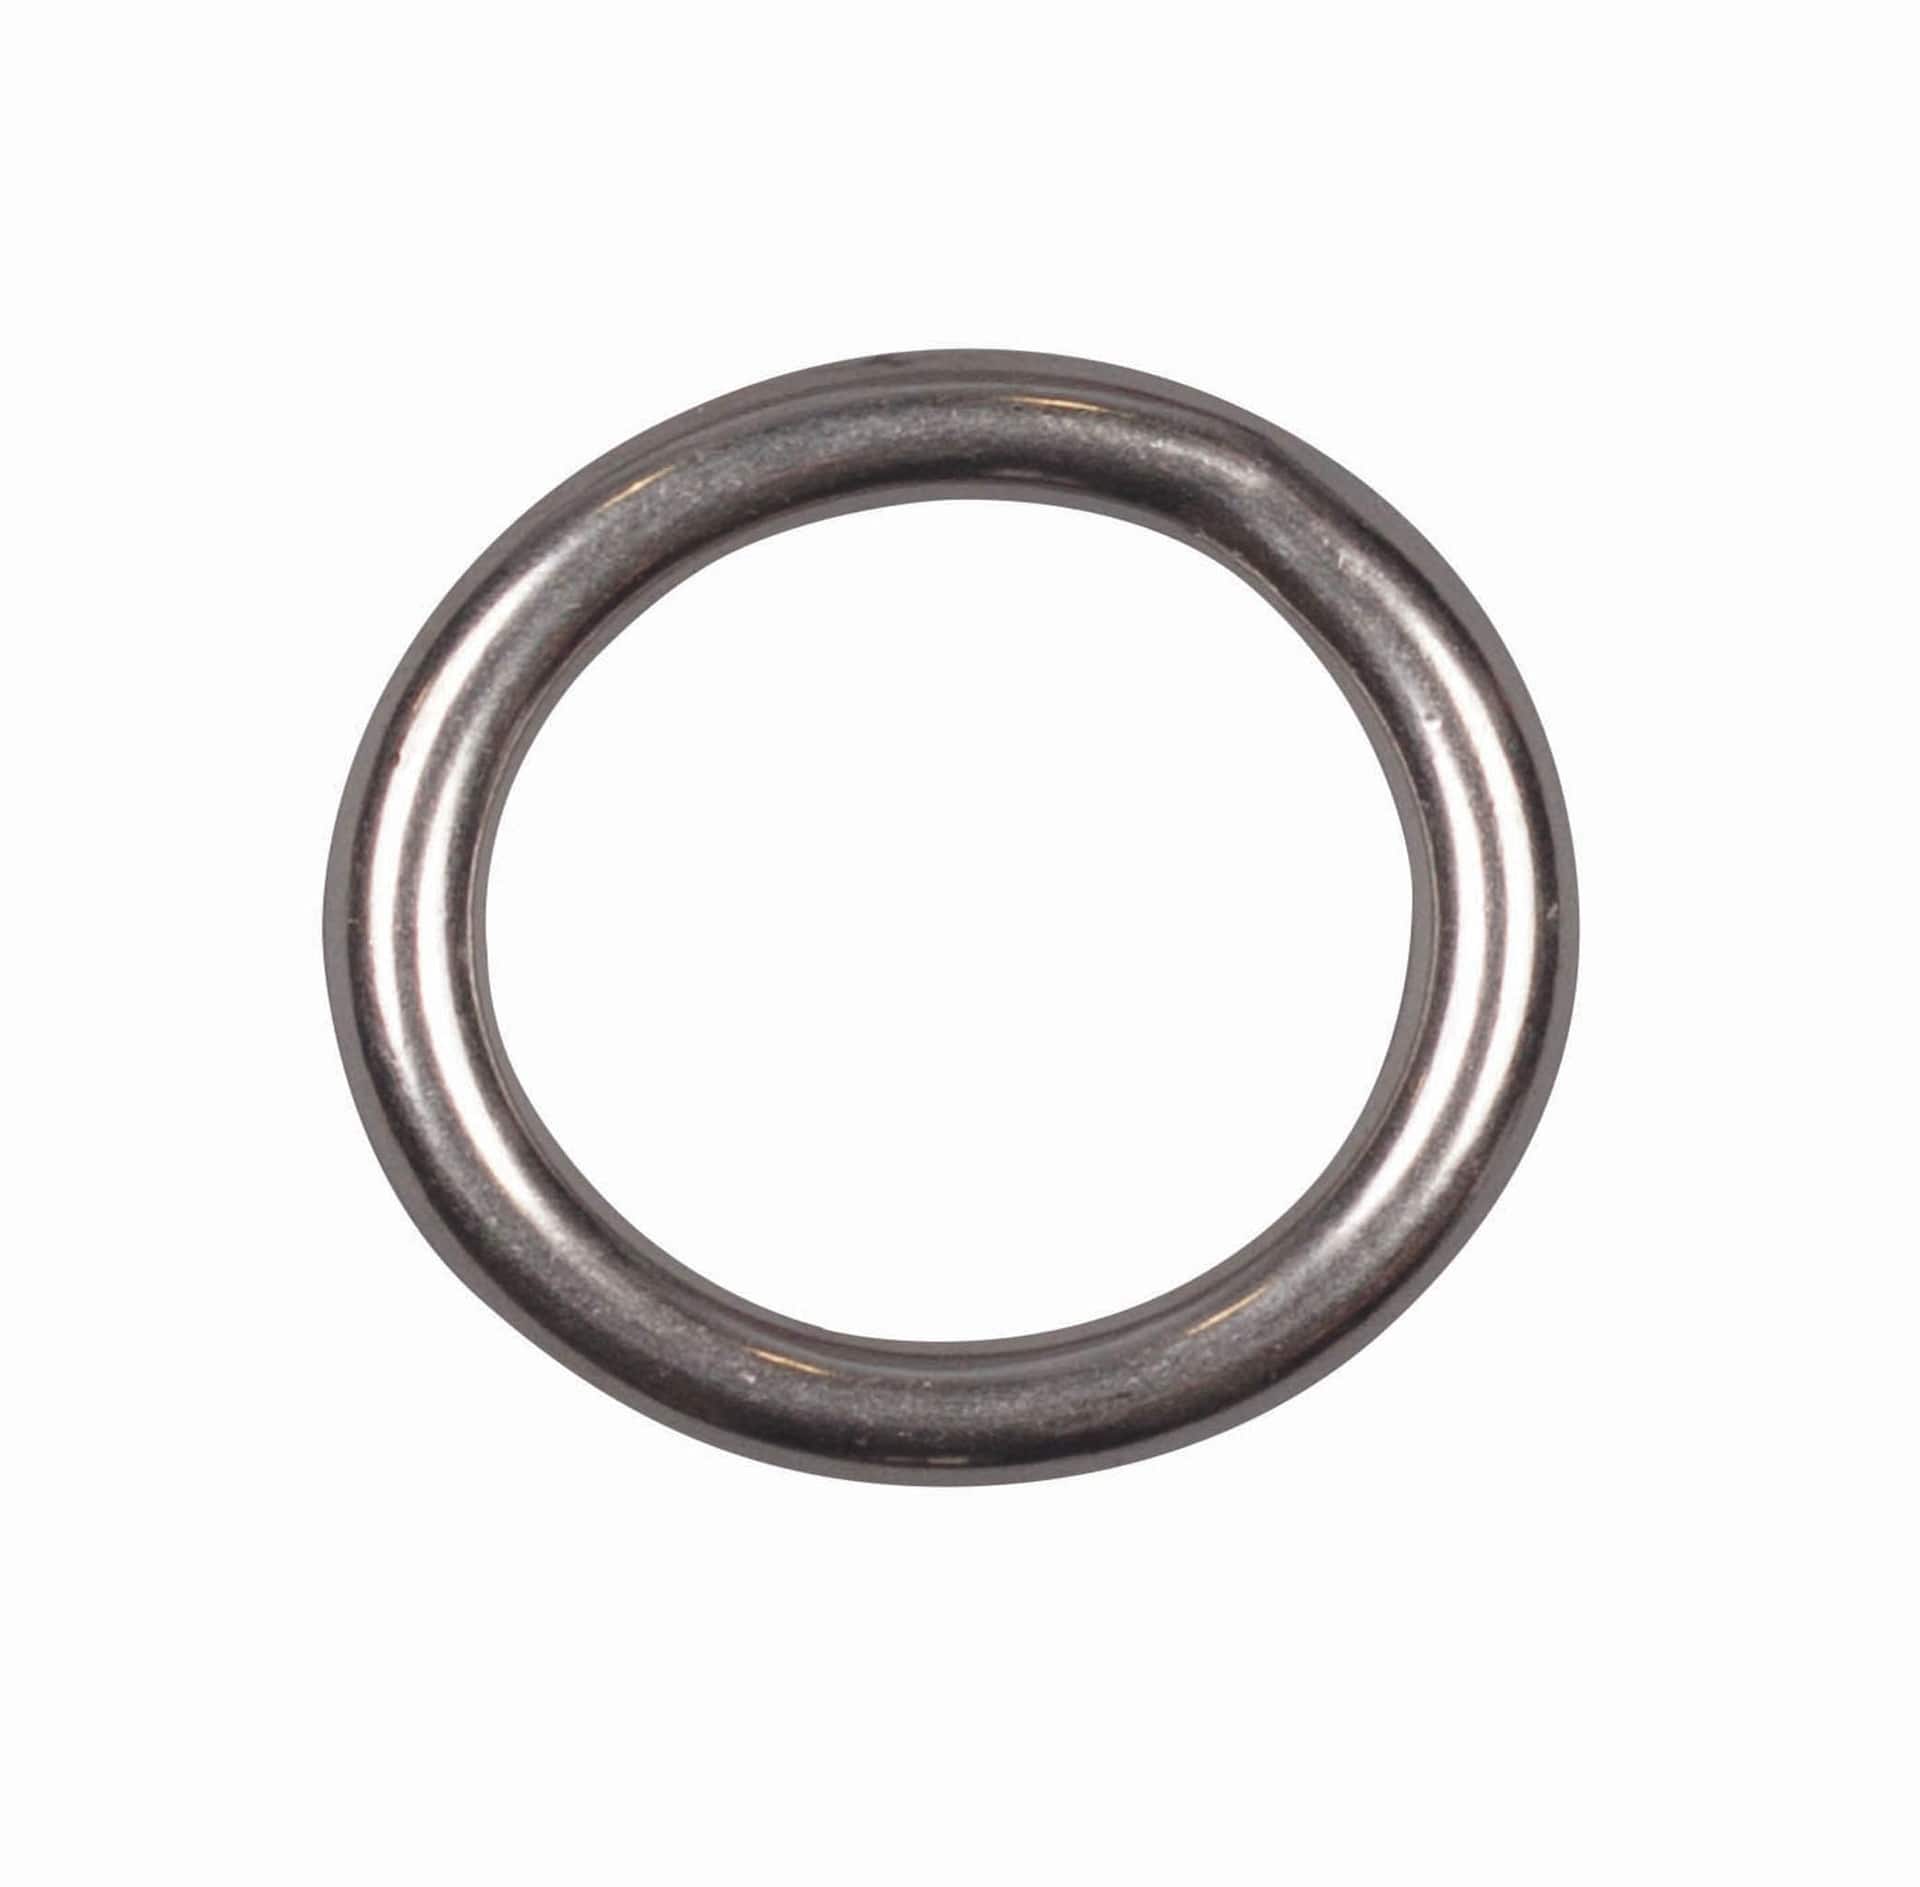 Ben-Mor Hardness Ring, Stainless Steel, Assorted Sizes